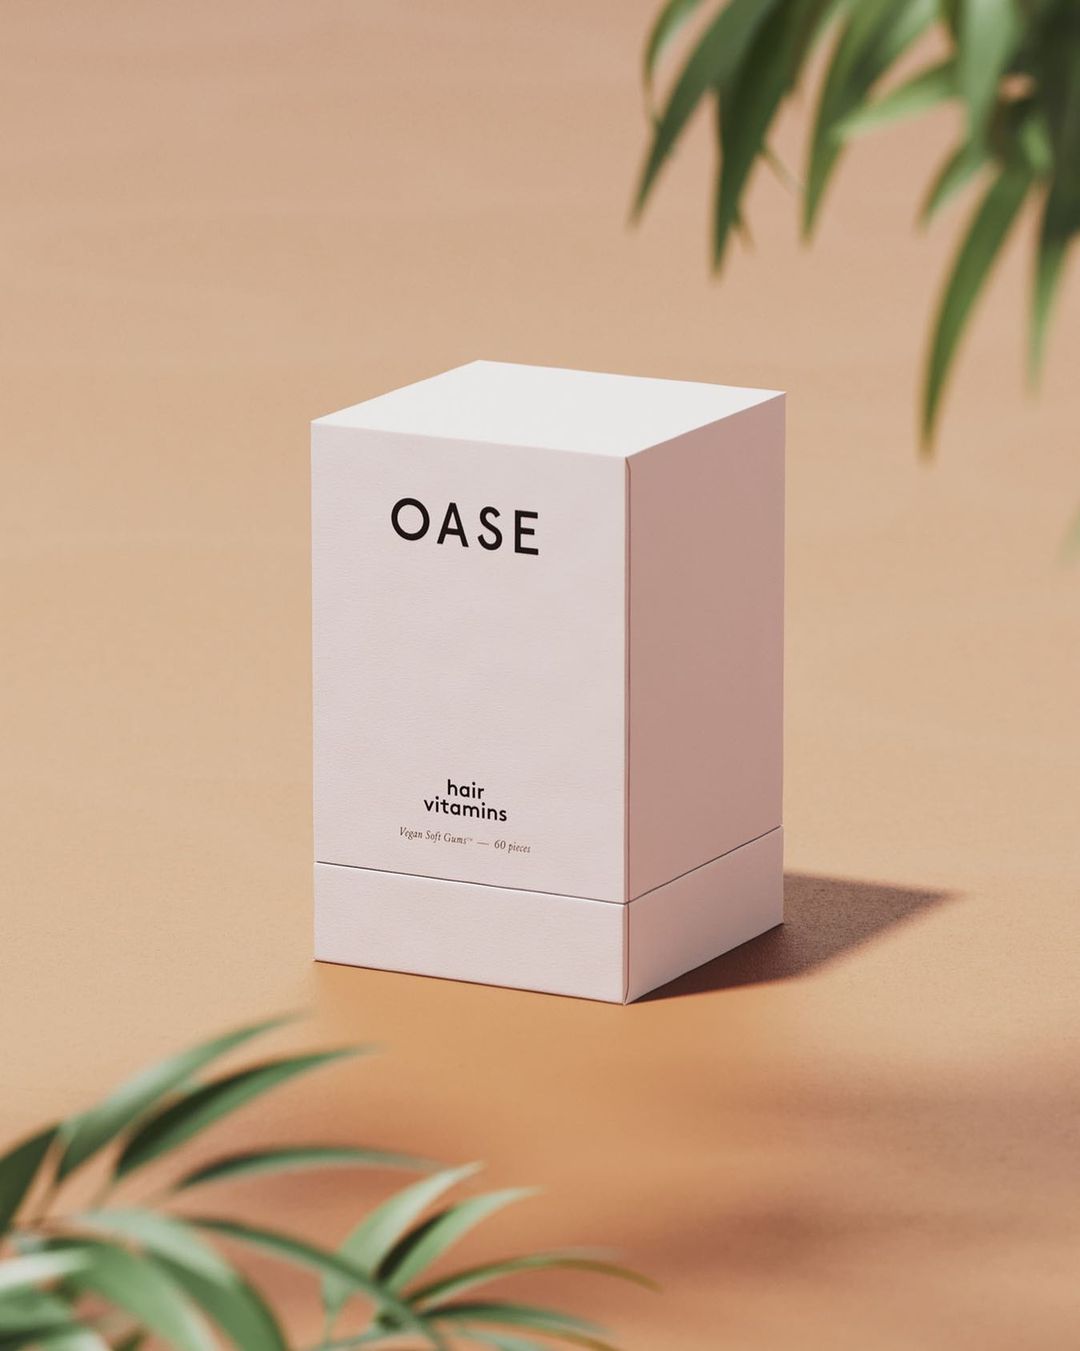 OASE-護發維生素-化妝品-品牌包裝設計圖3